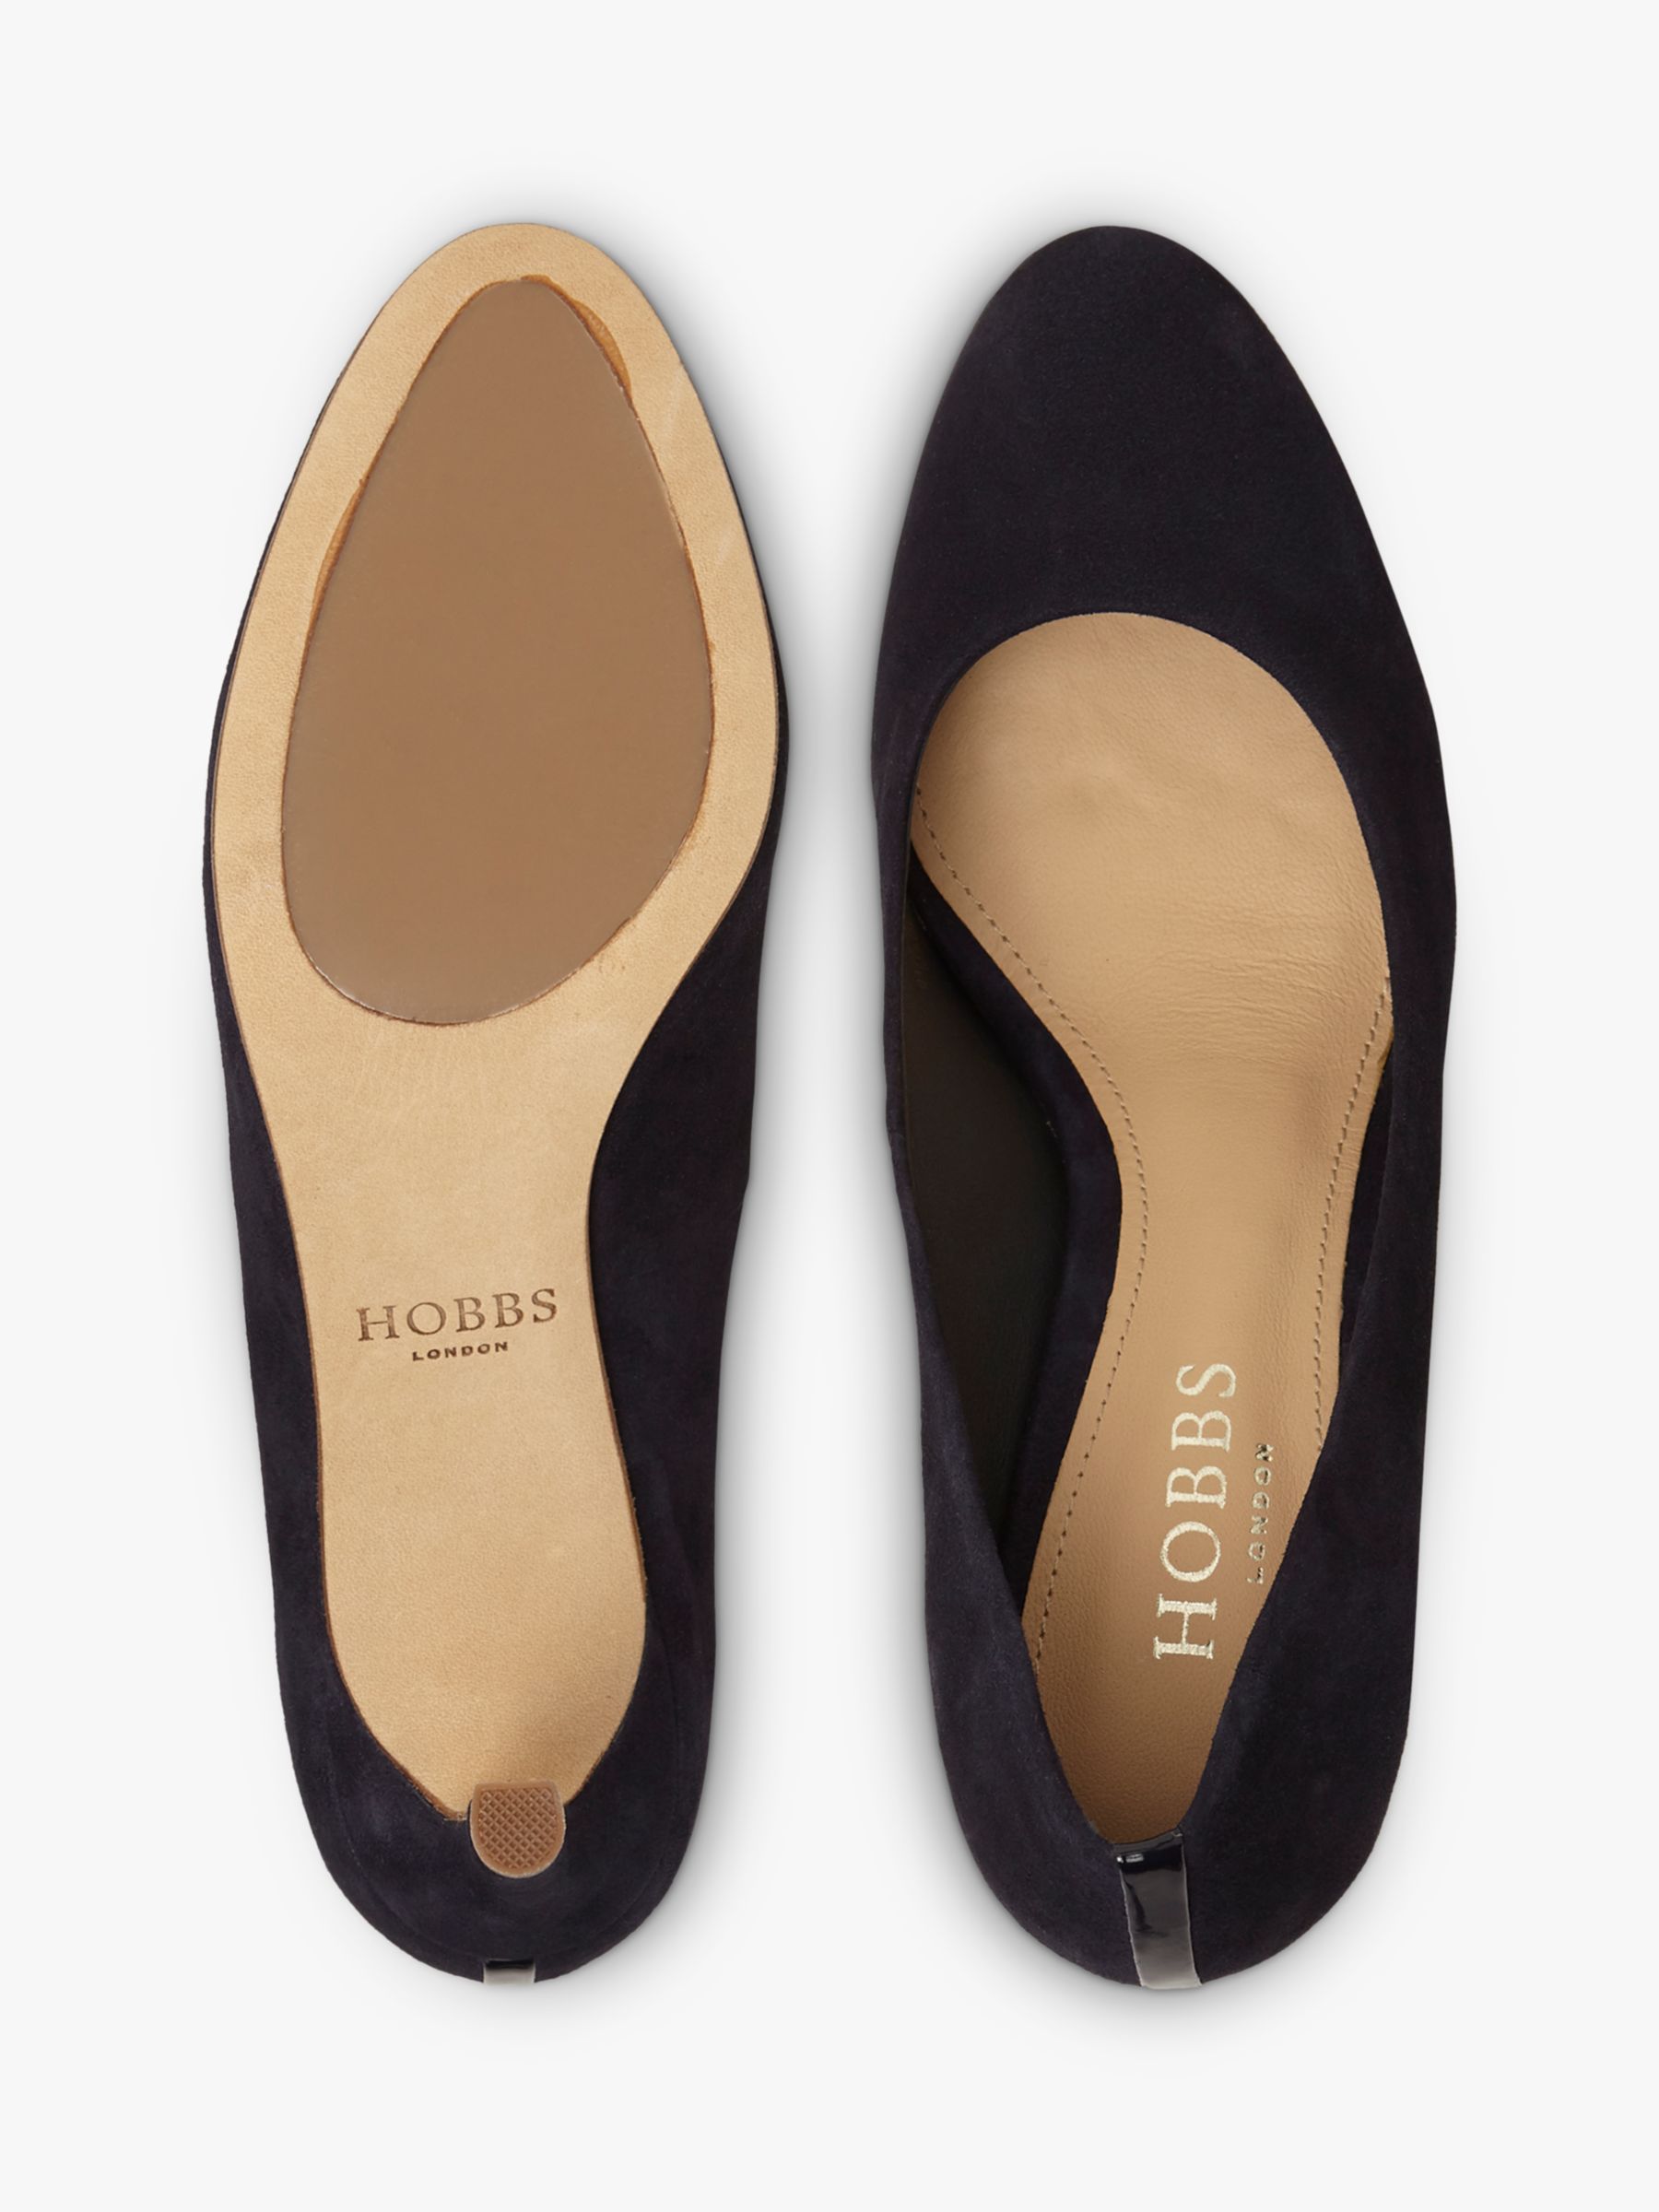 Hobbs Lizzie Suede Stiletto Heel Court Shoes, Navy at John Lewis & Partners